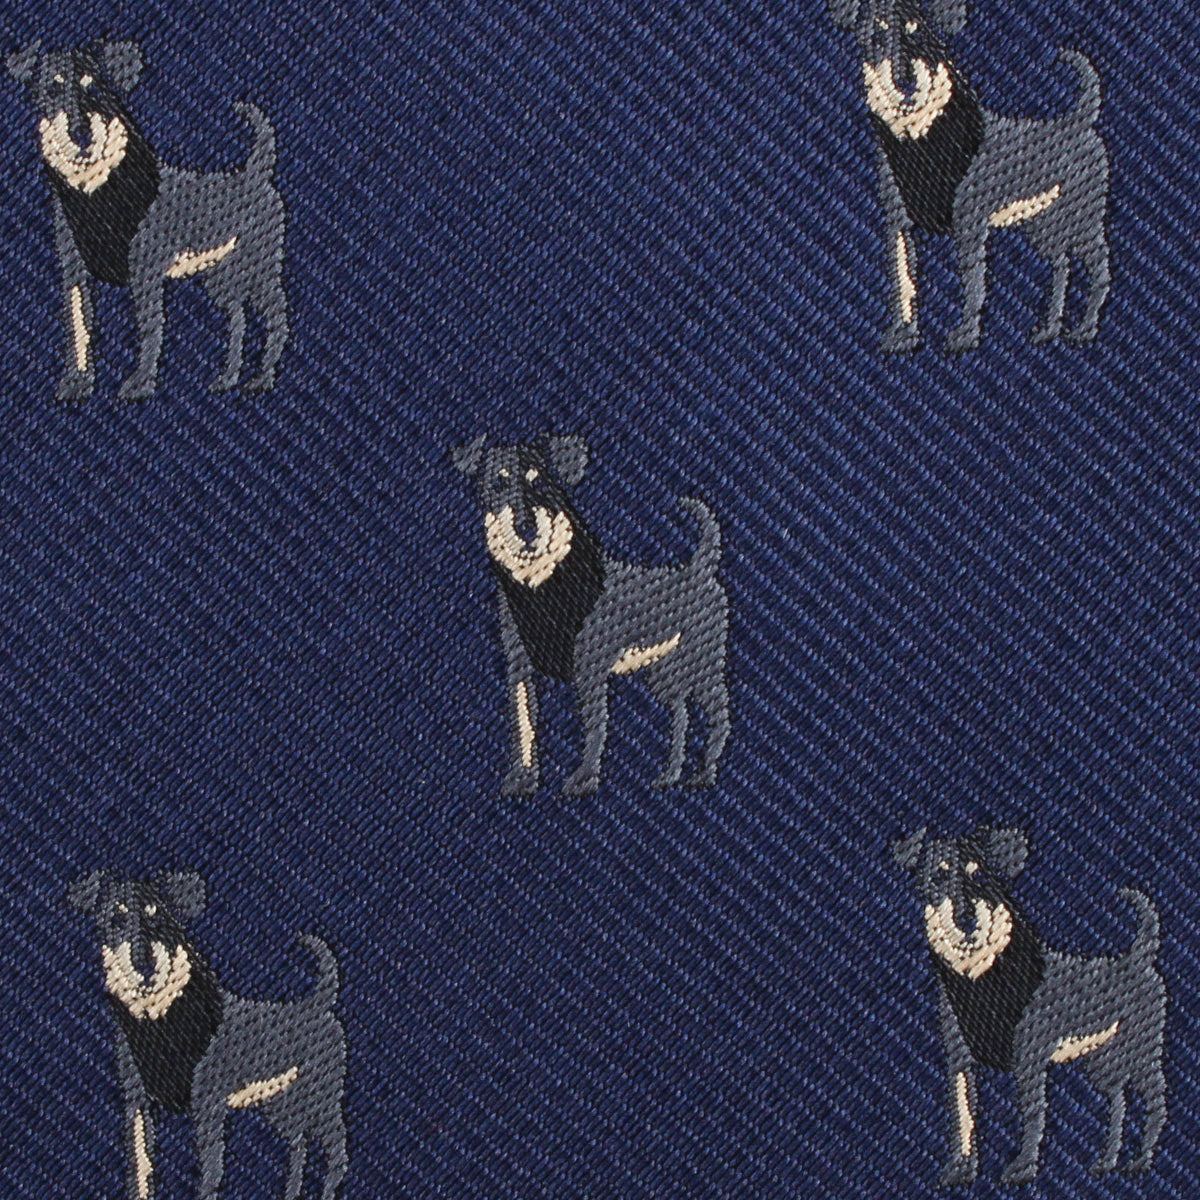 Rottweiler Dog Fabric Mens Diamond Bowtie